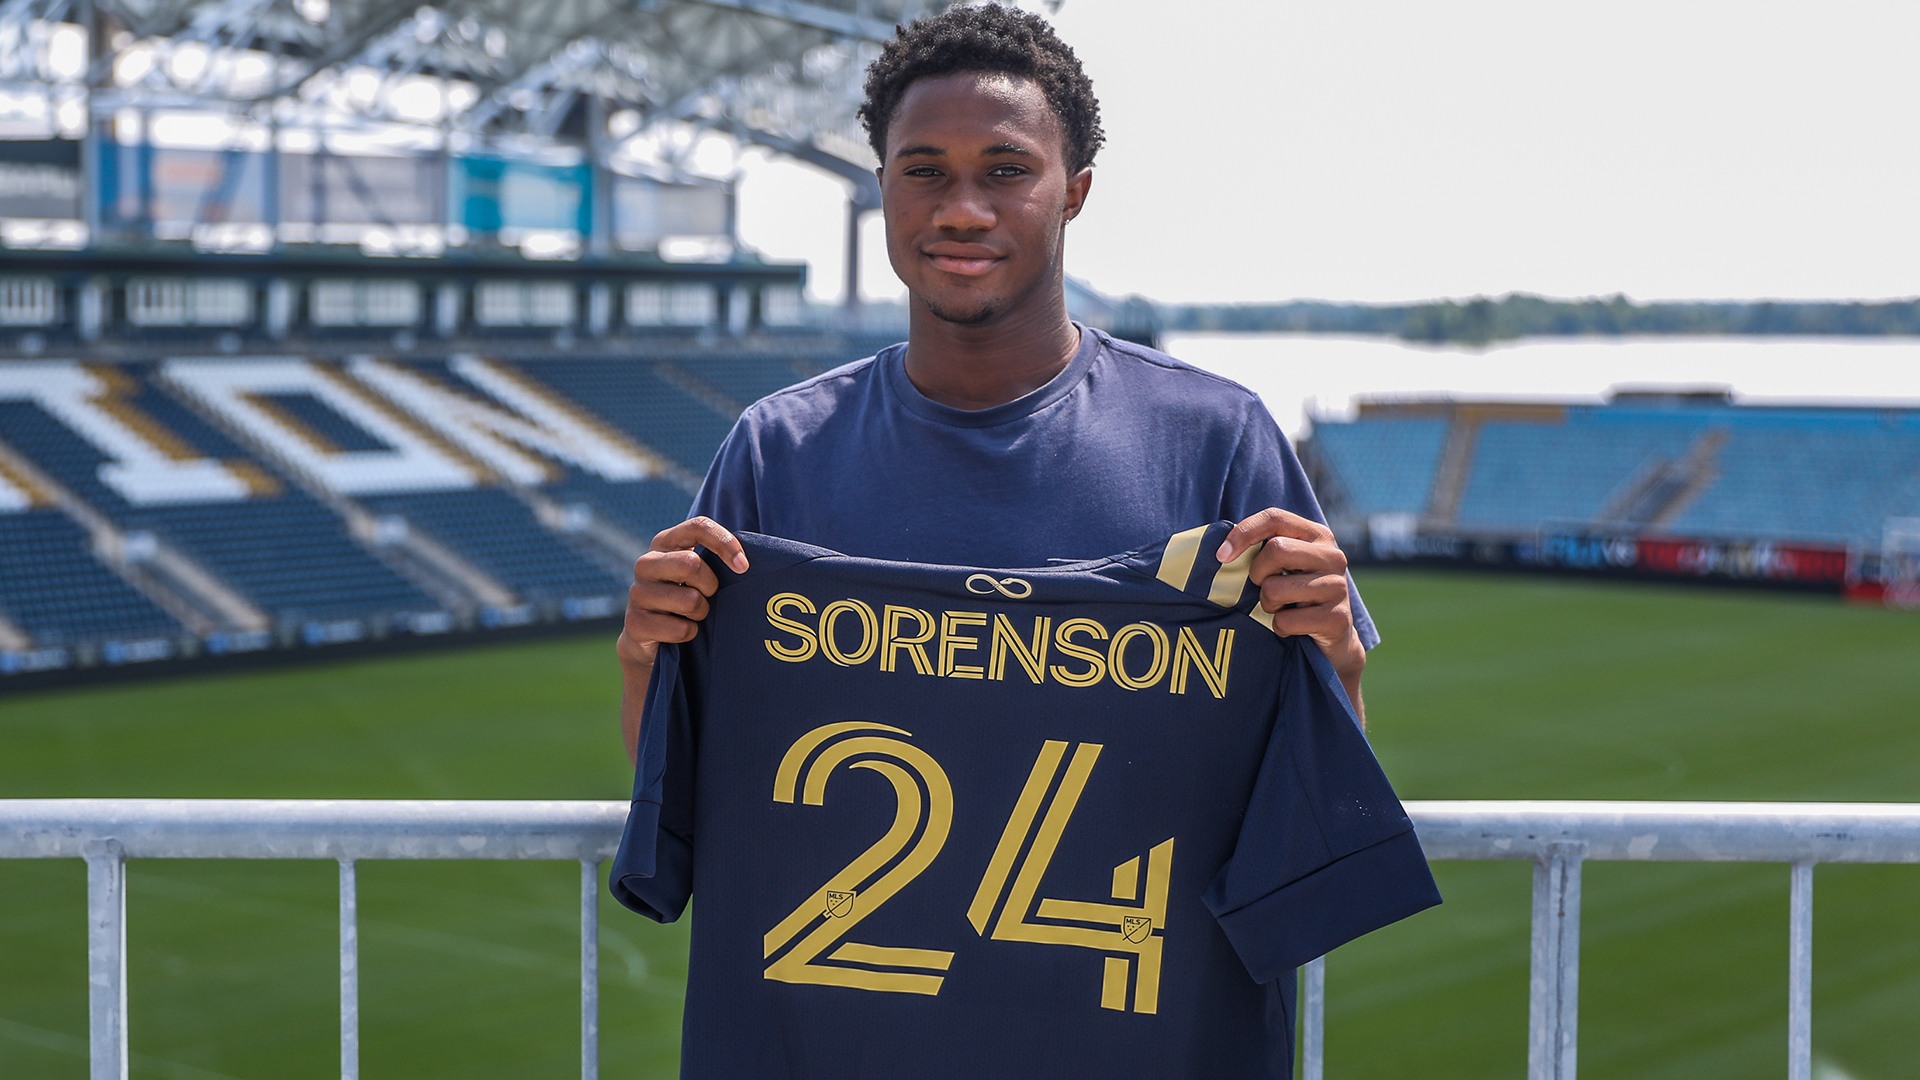 Union signs Anton Sorenson as Homegrown